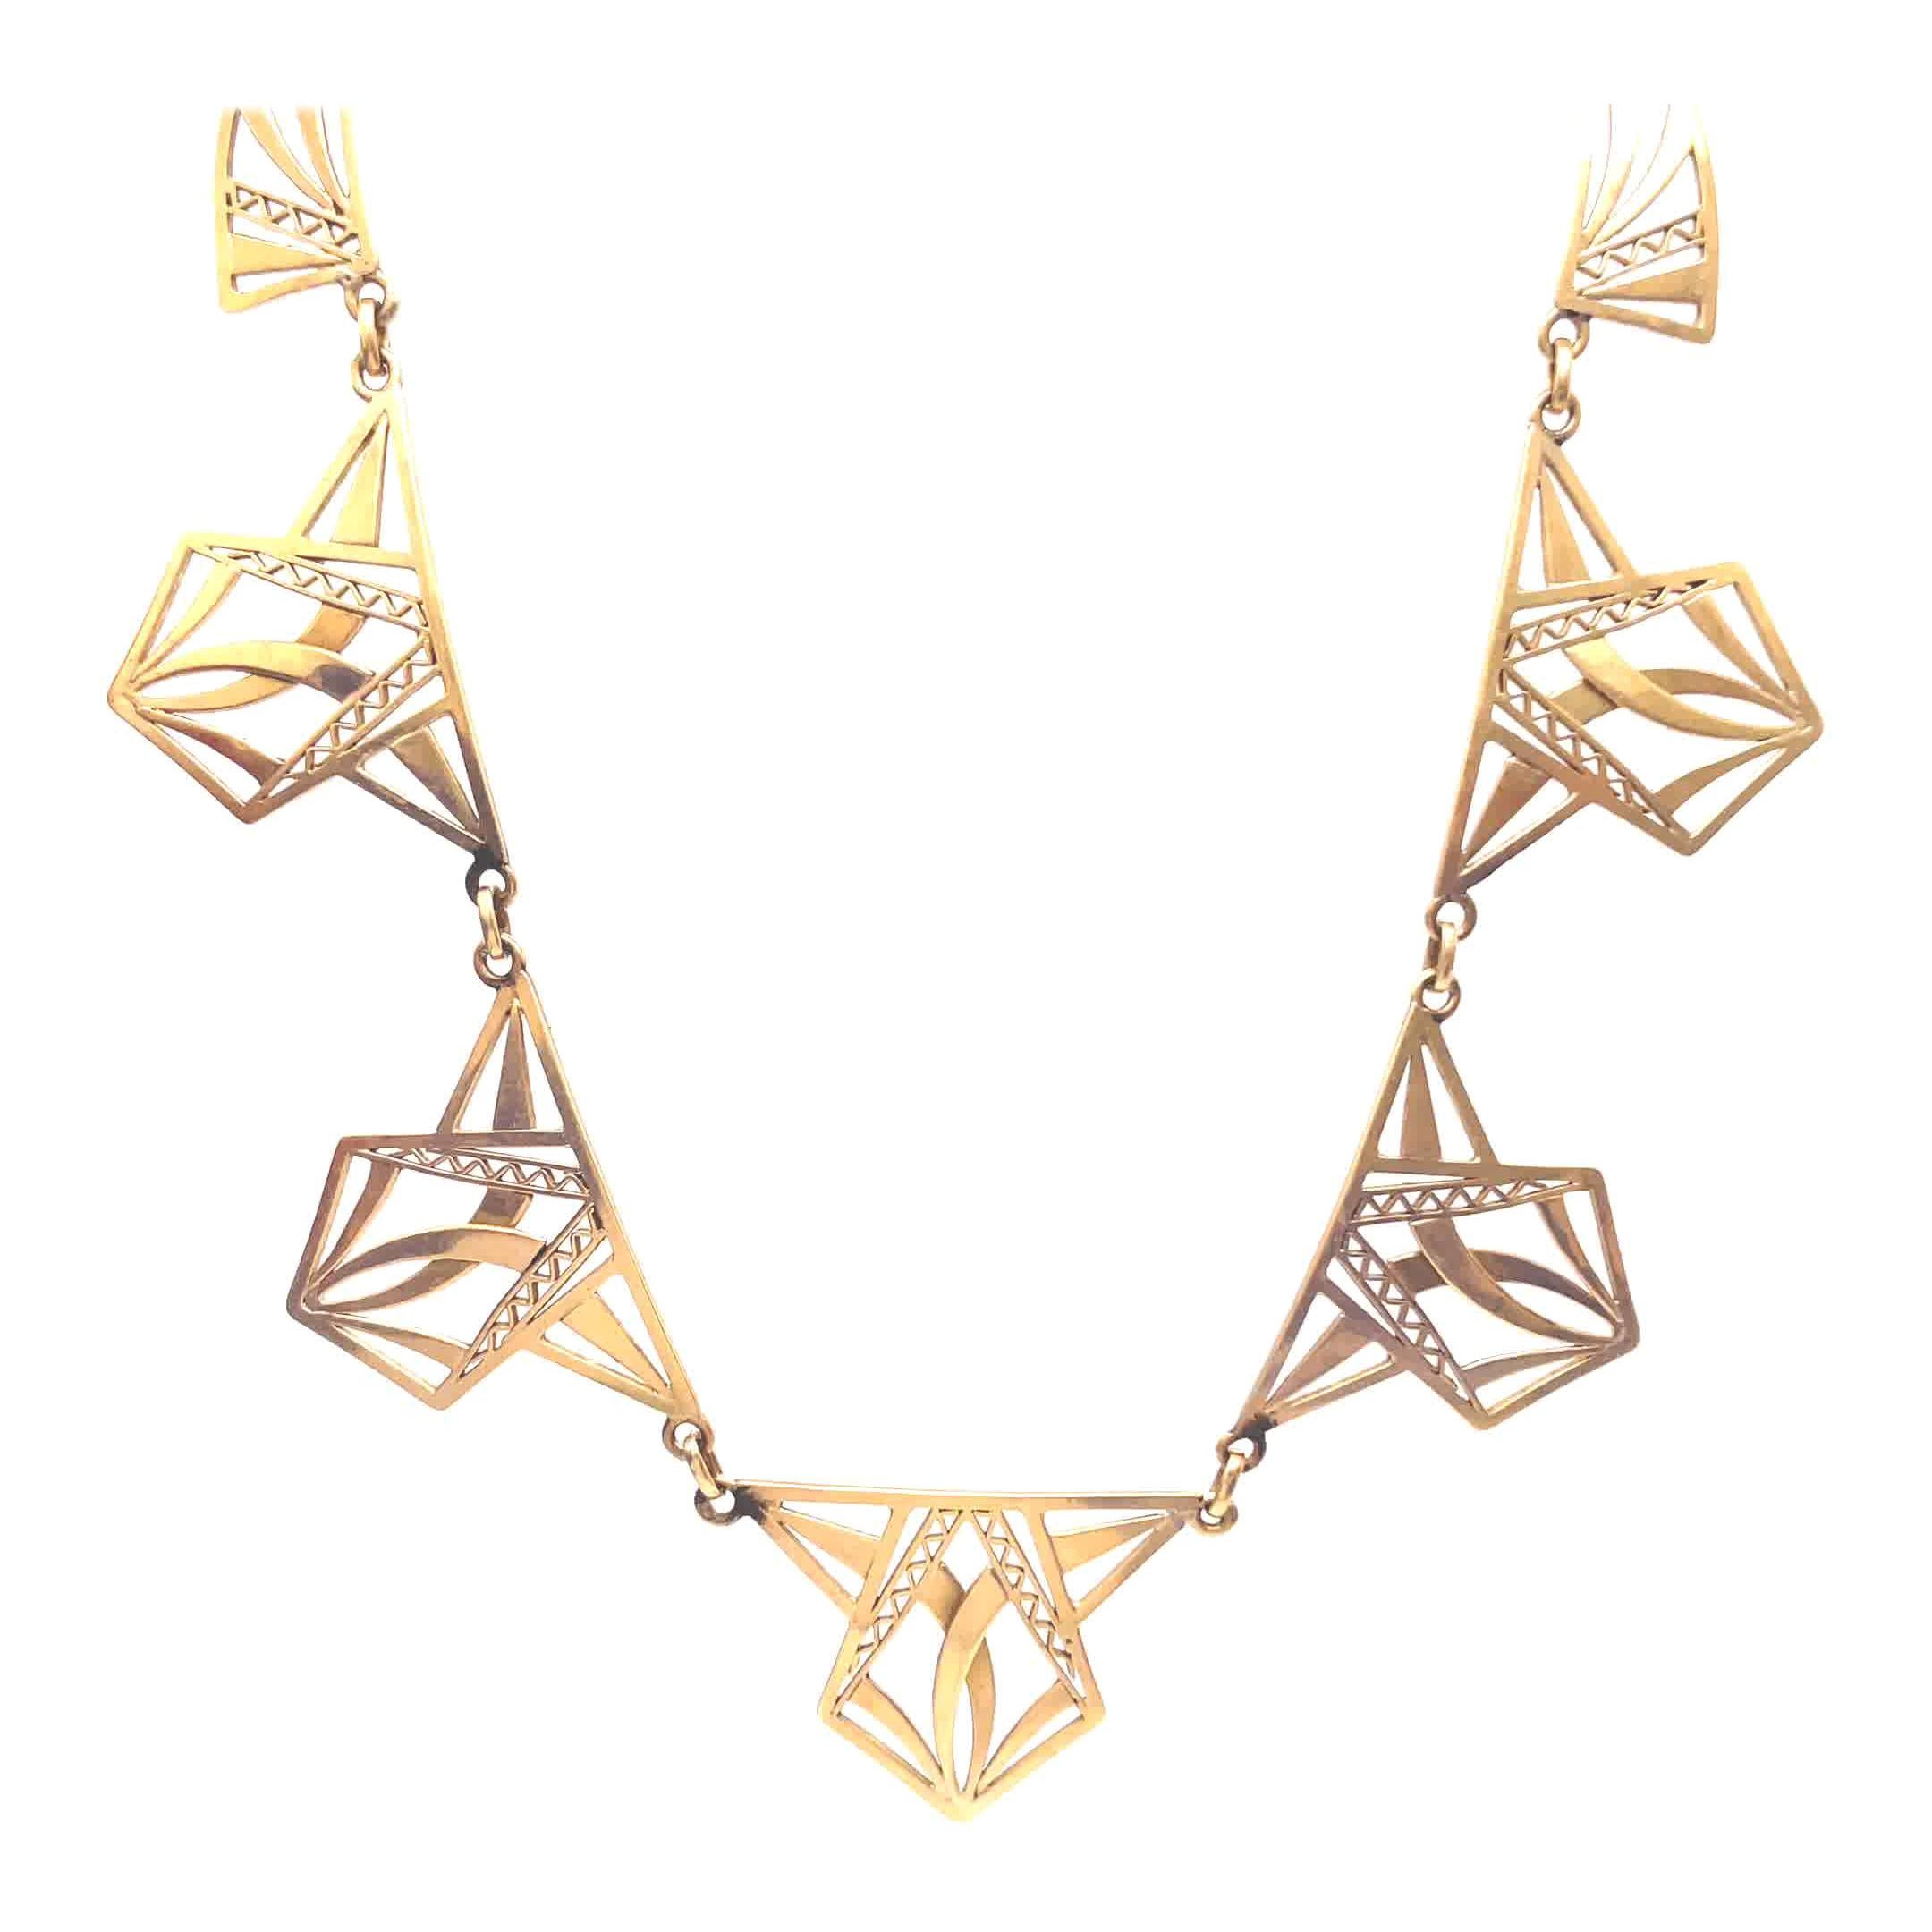 French Art Deco Geometric 18 Karat Gold Necklace